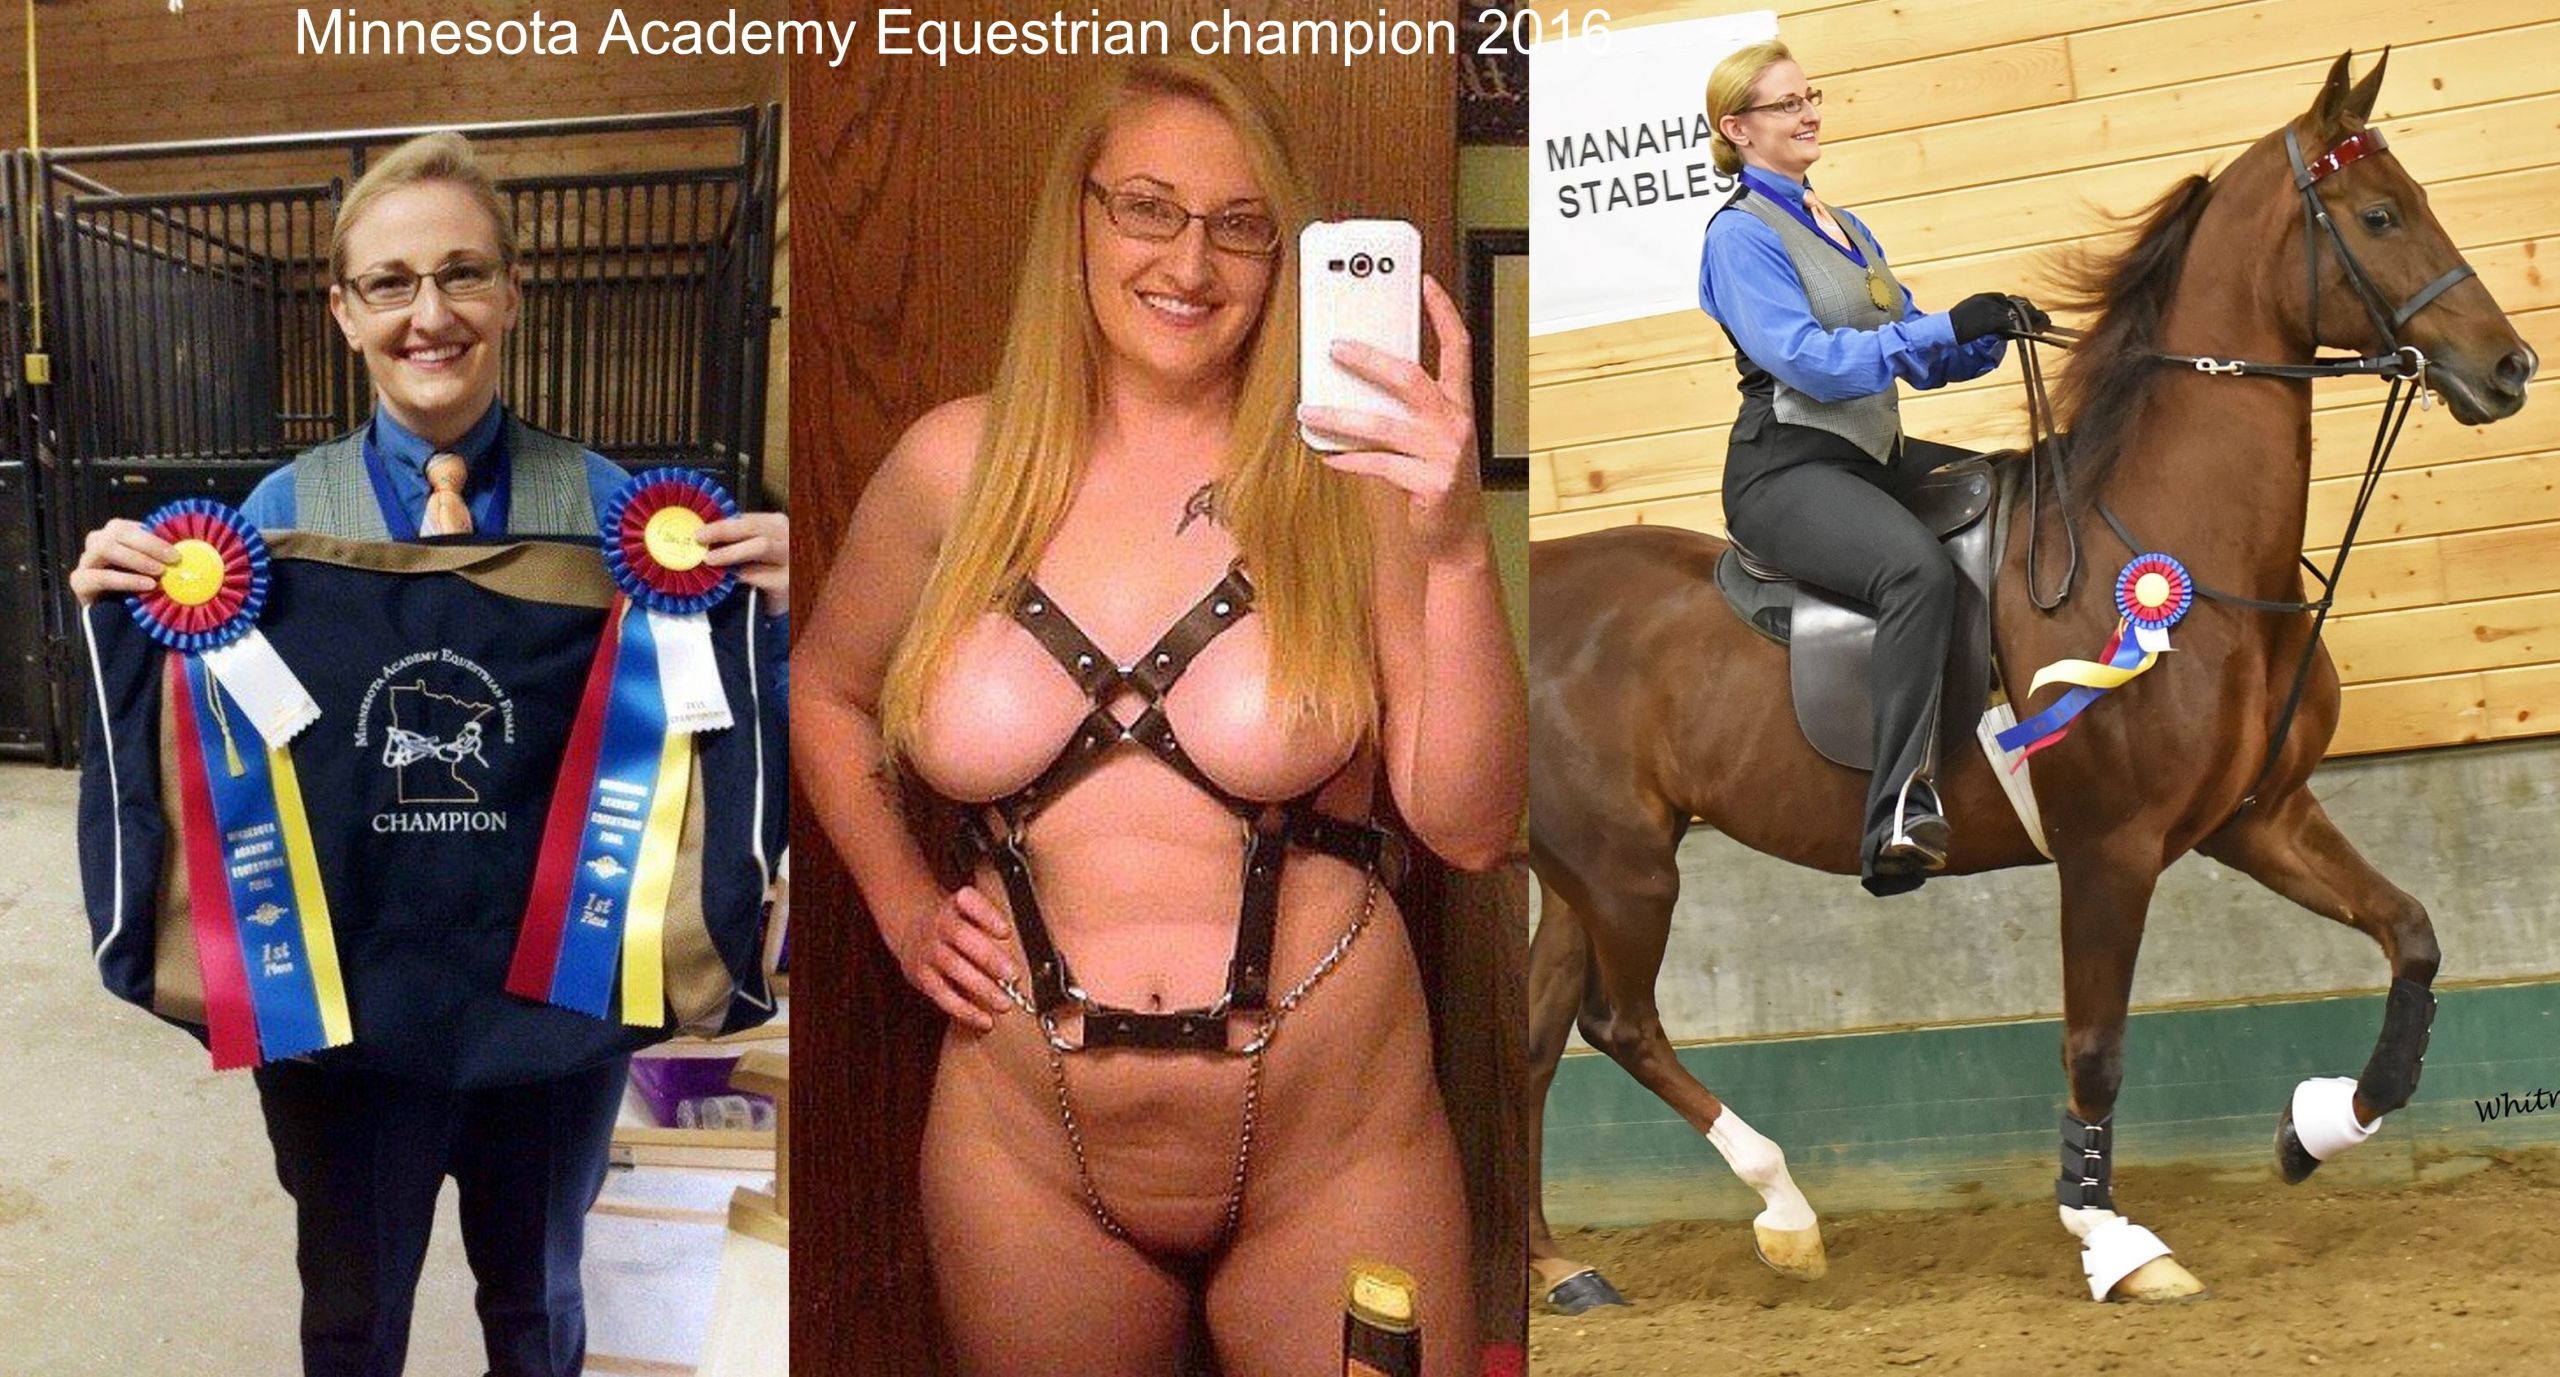 Minnesota Academy Equestrian champion 2016